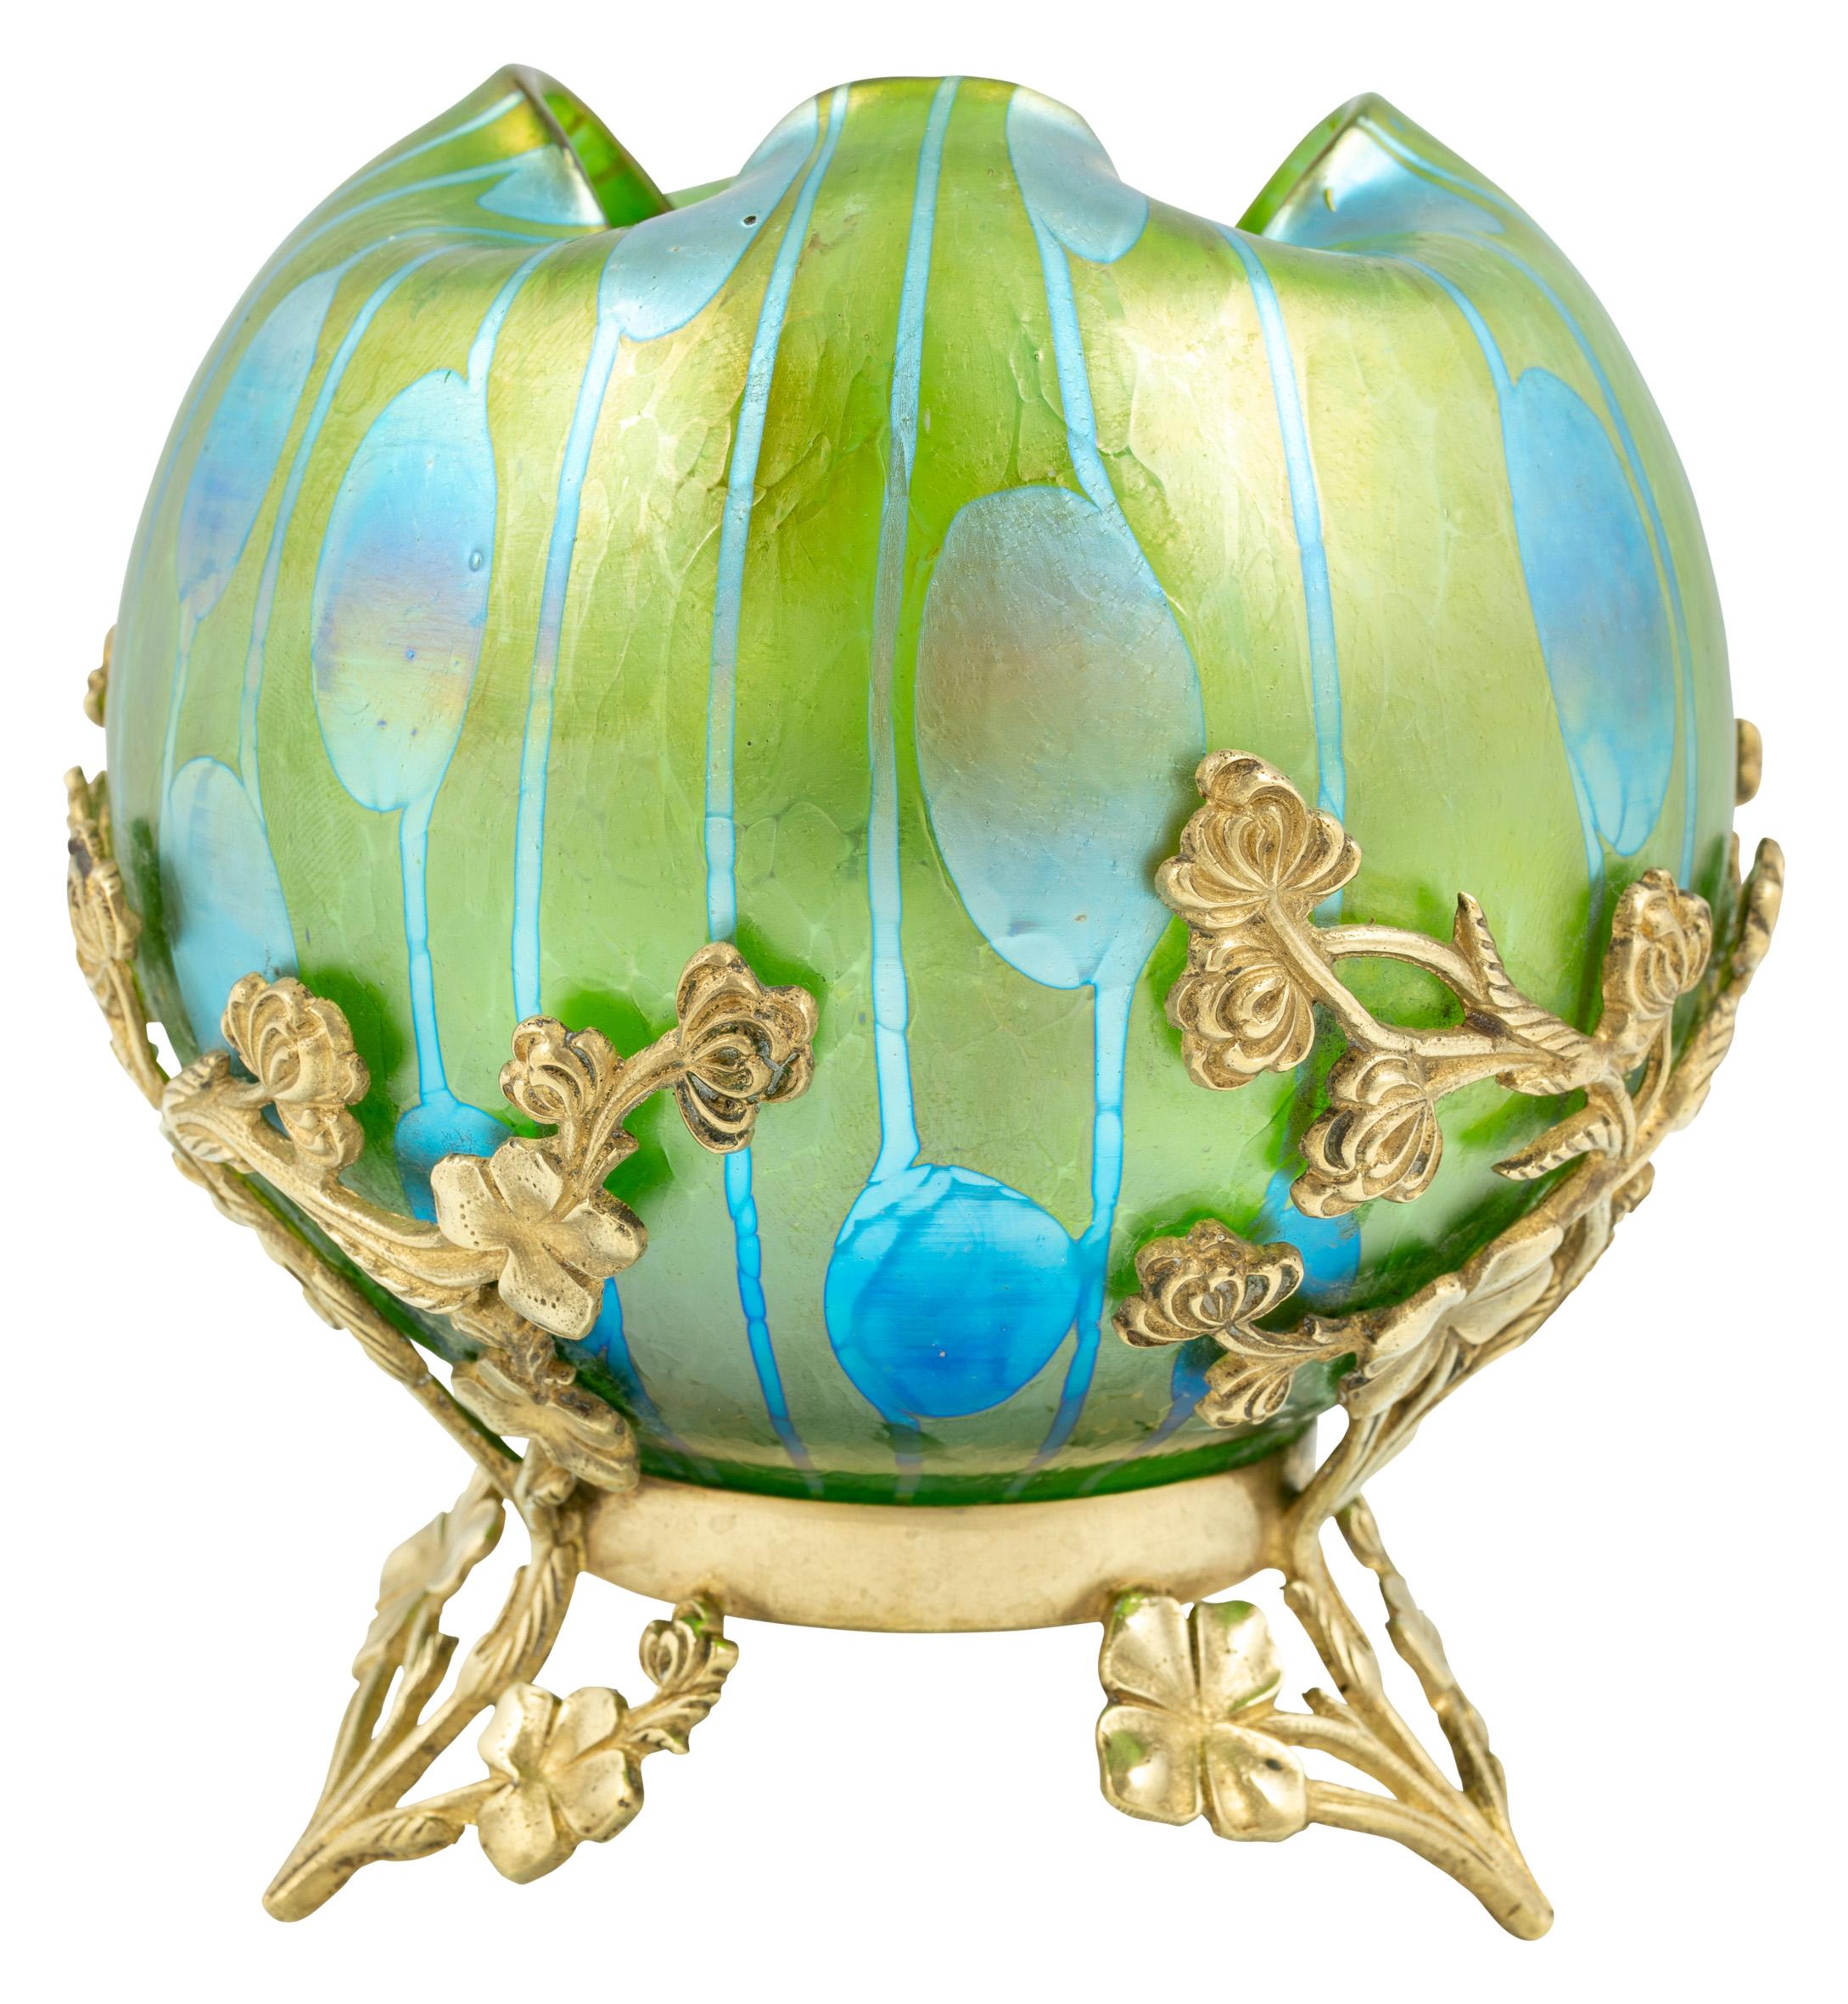 Glass vase with brass fitting, Koloman Moser, manufactured by Johann Loetz Witwe, Streifen und Flecken decoration, ca. 1901, Art Nouveau, Jugendstil, Art Deco, art glass, iridescent glass, blue, green, gold

Technique: Glass, mold blown, free